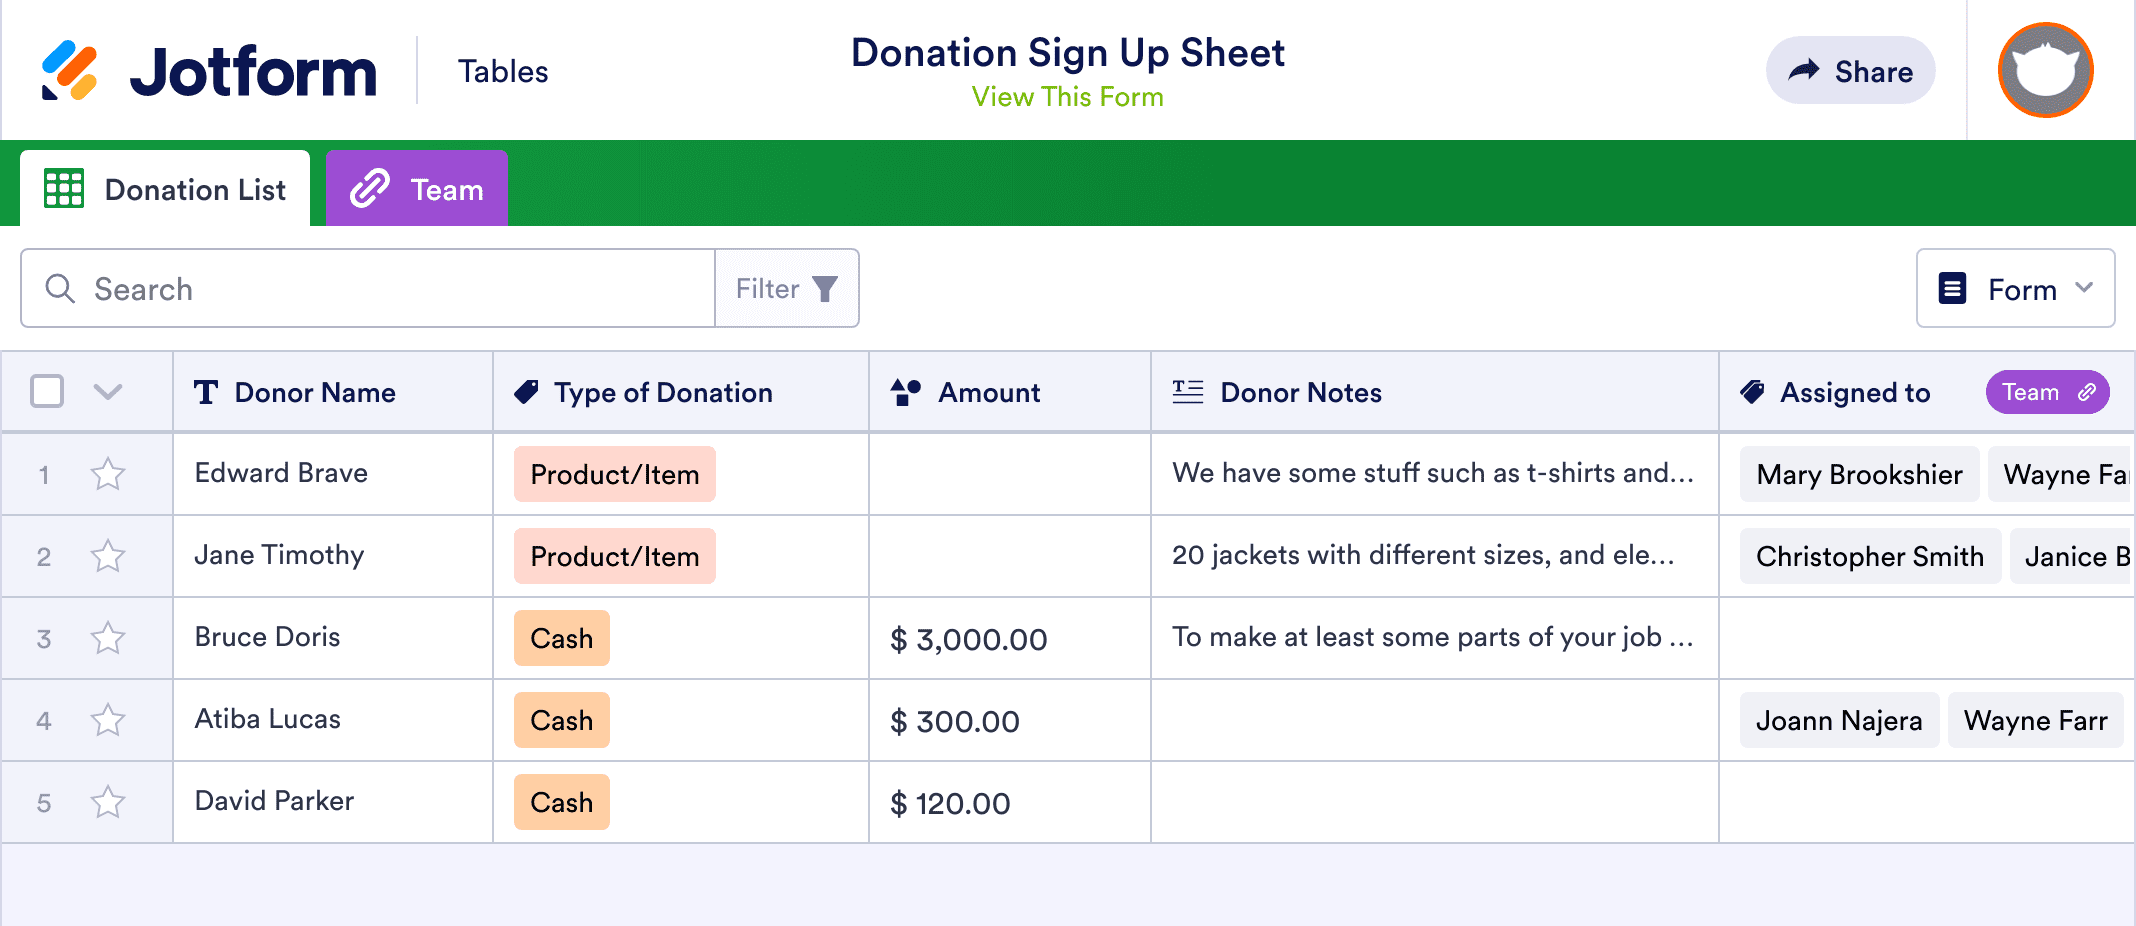 Donation Sign Up Sheet